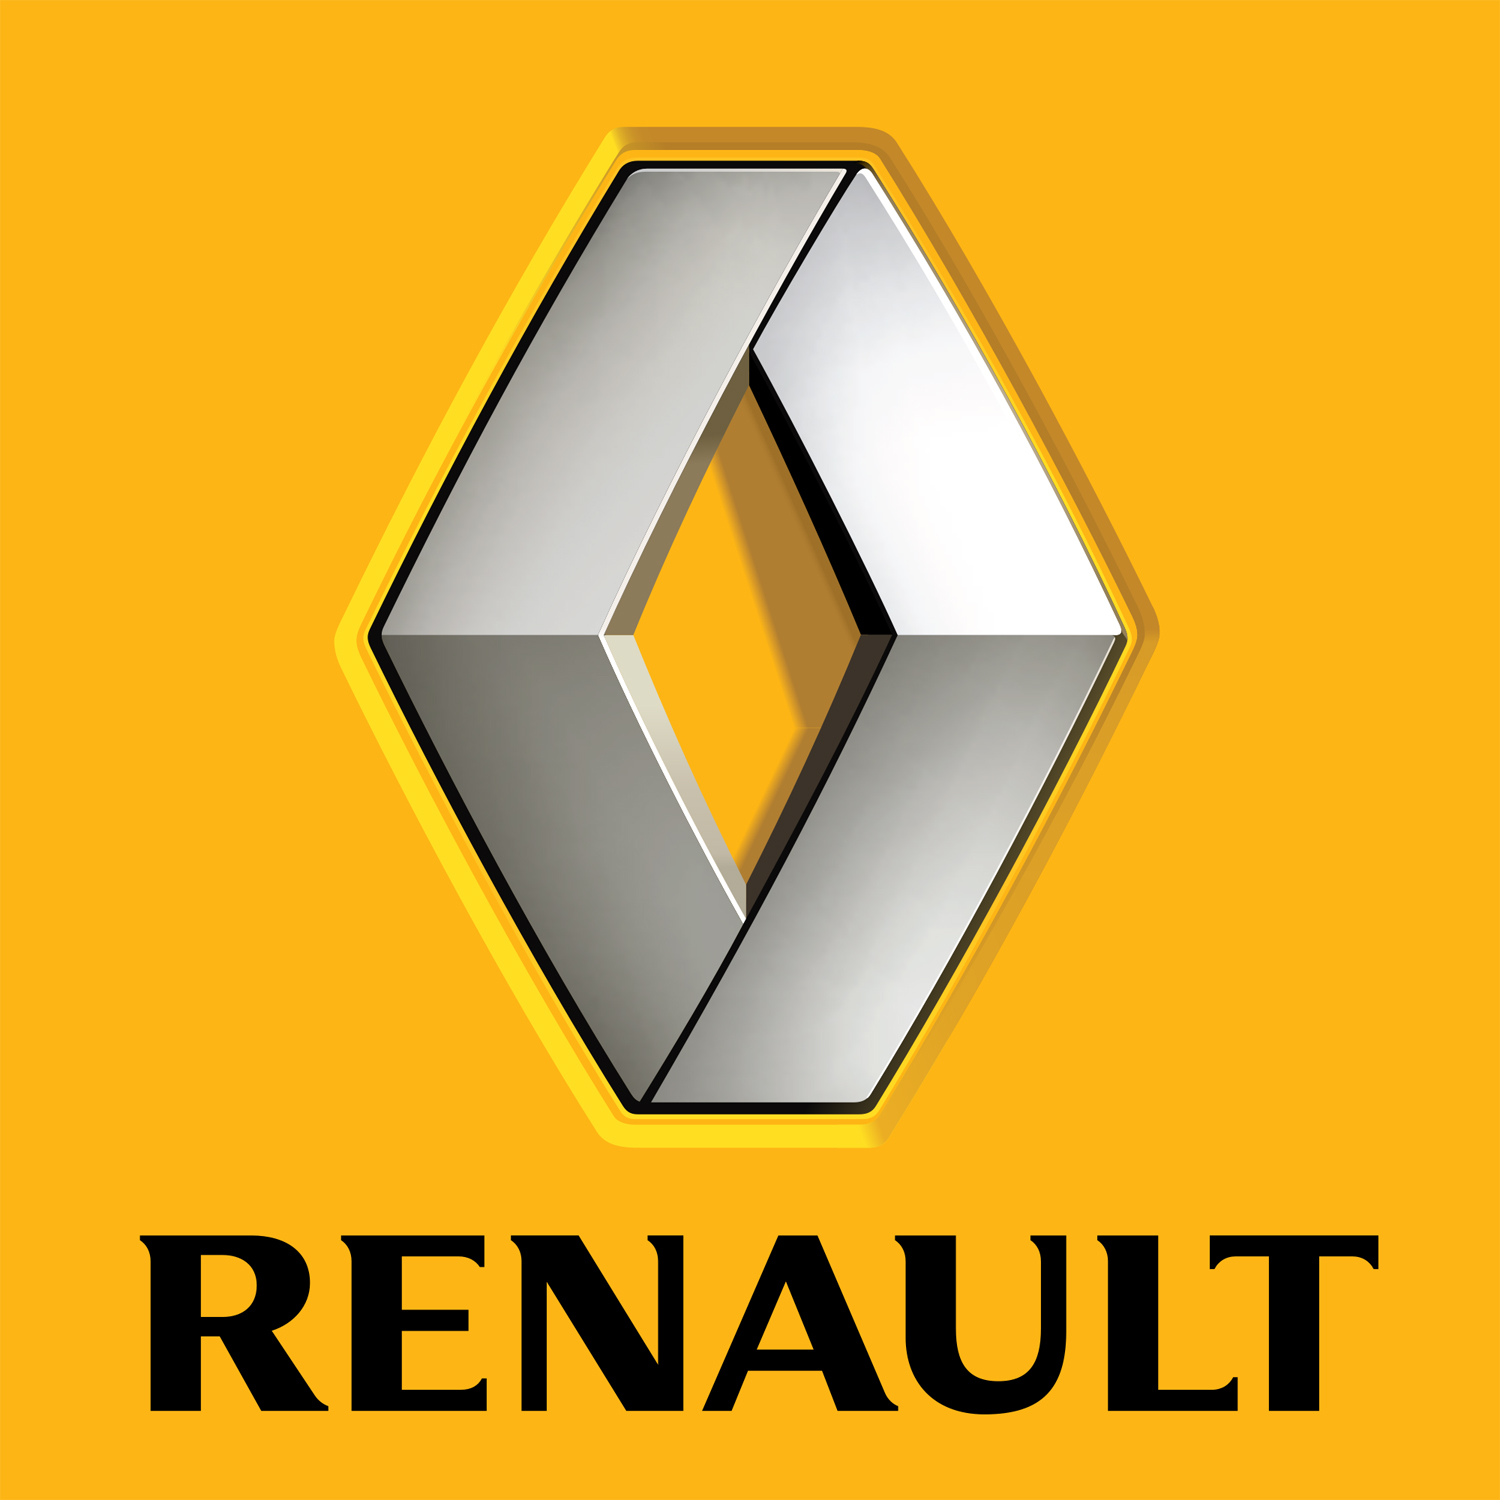 Renault logo car emblem